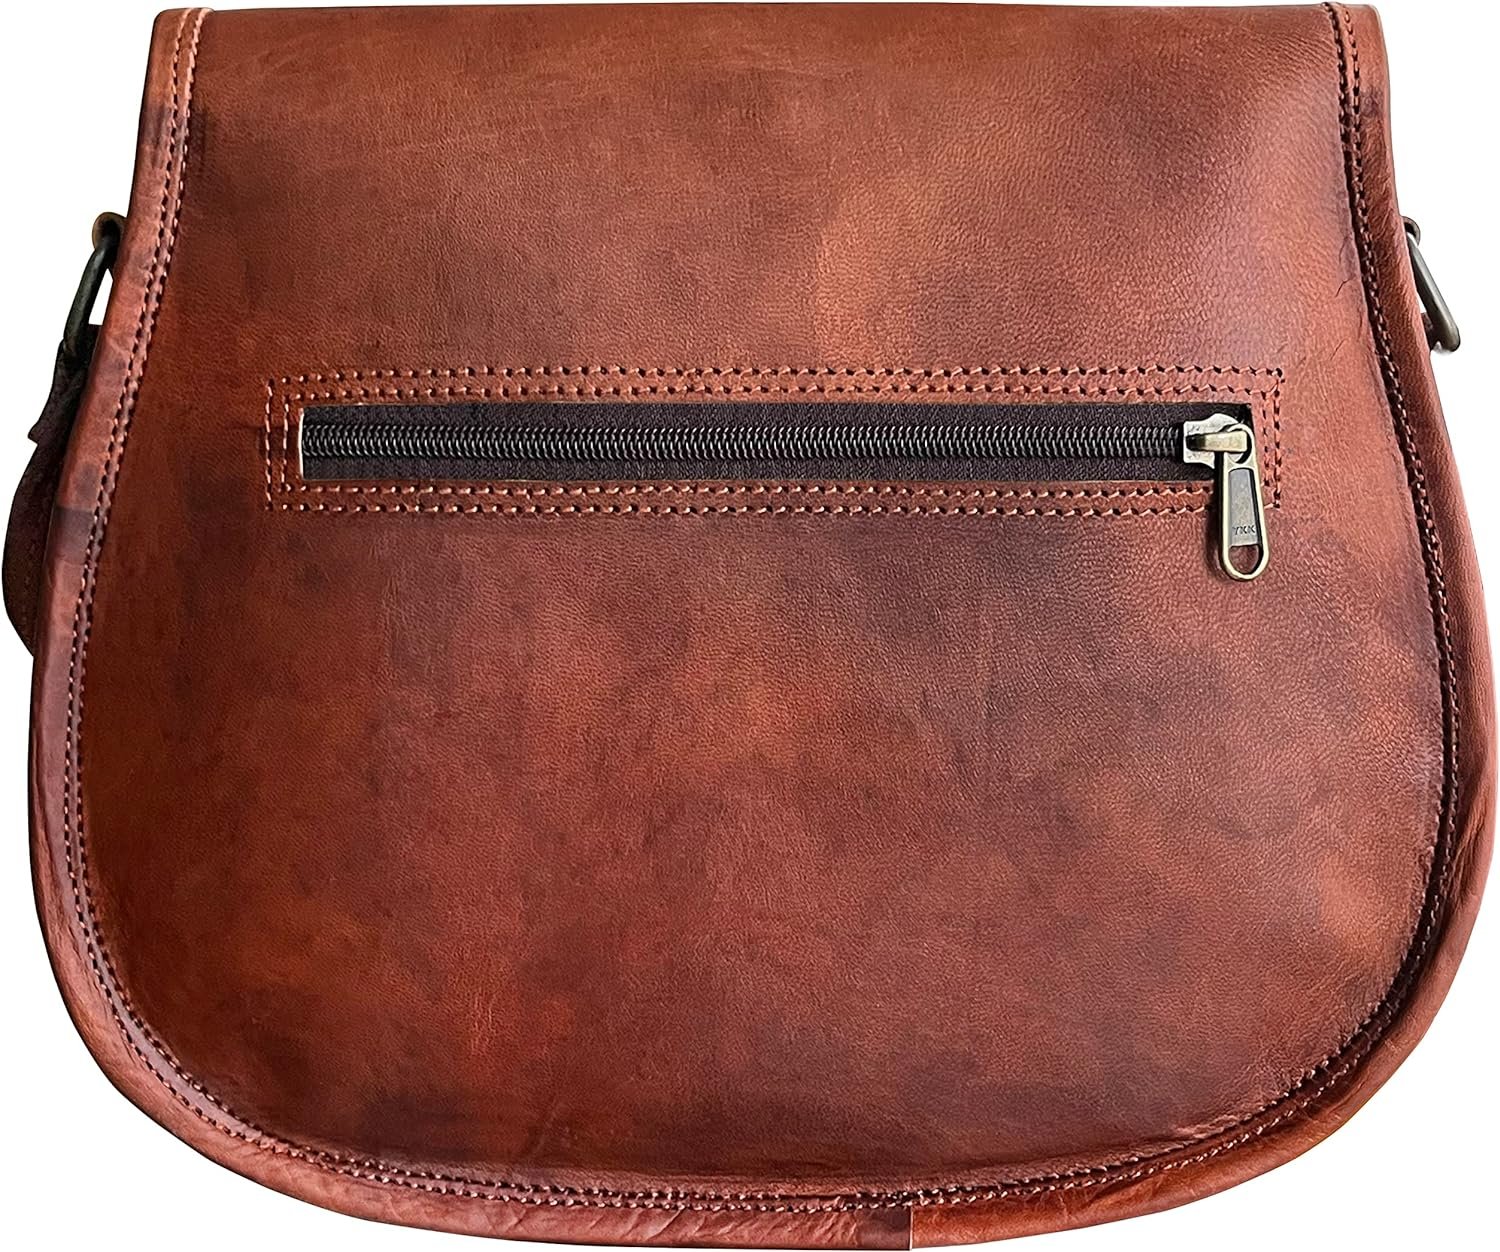 RUSTIC TOWN Leather Crossbody Satchel Bag Vintage Purses Handbags for Women Review